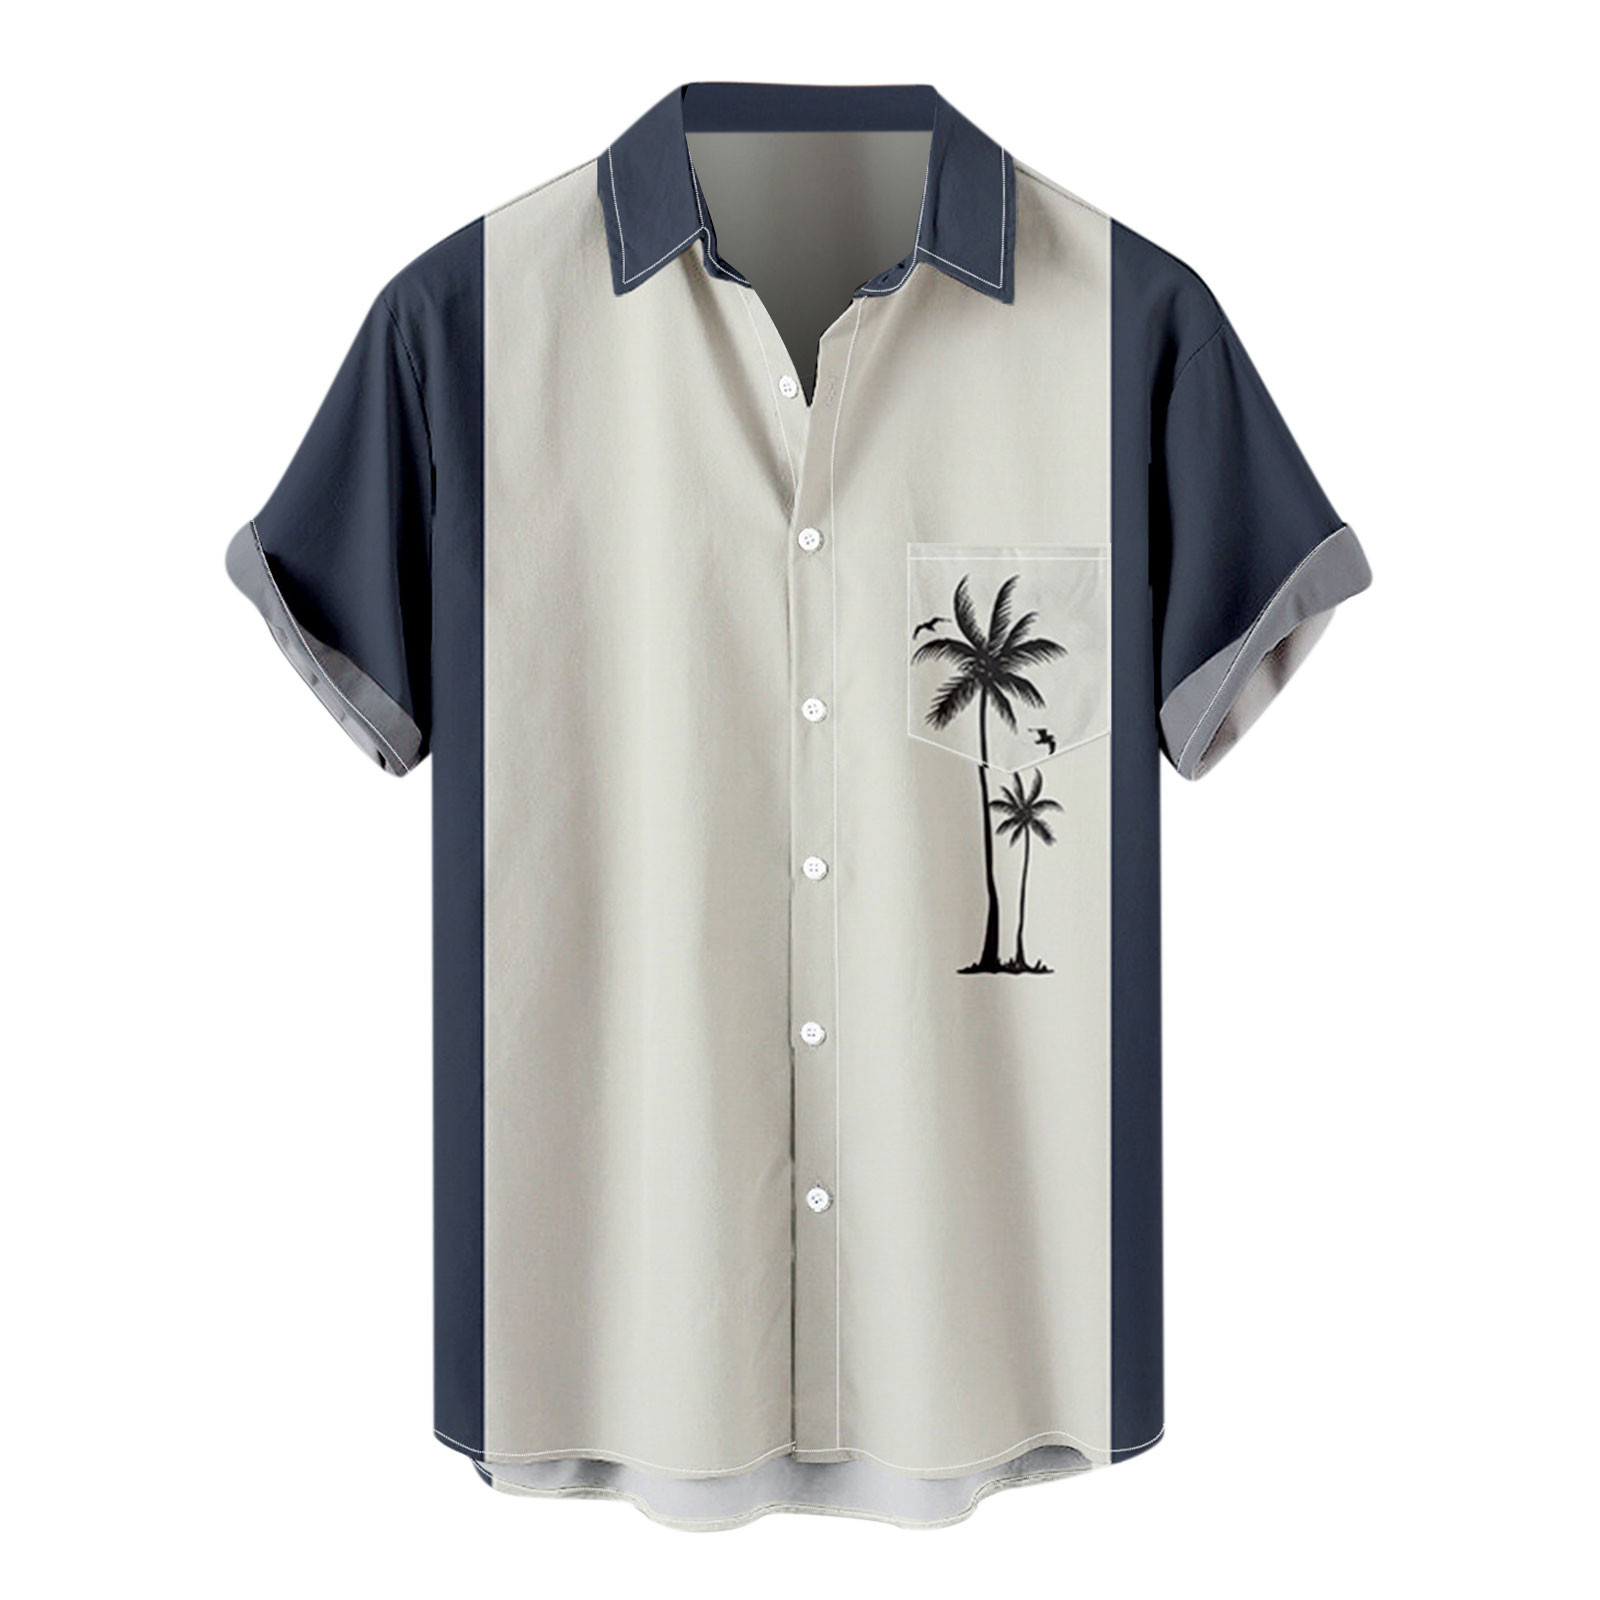 qucoqpe Mens Hawaiian Shirt Casual Button Down Shirt Short Sleeve Party ...